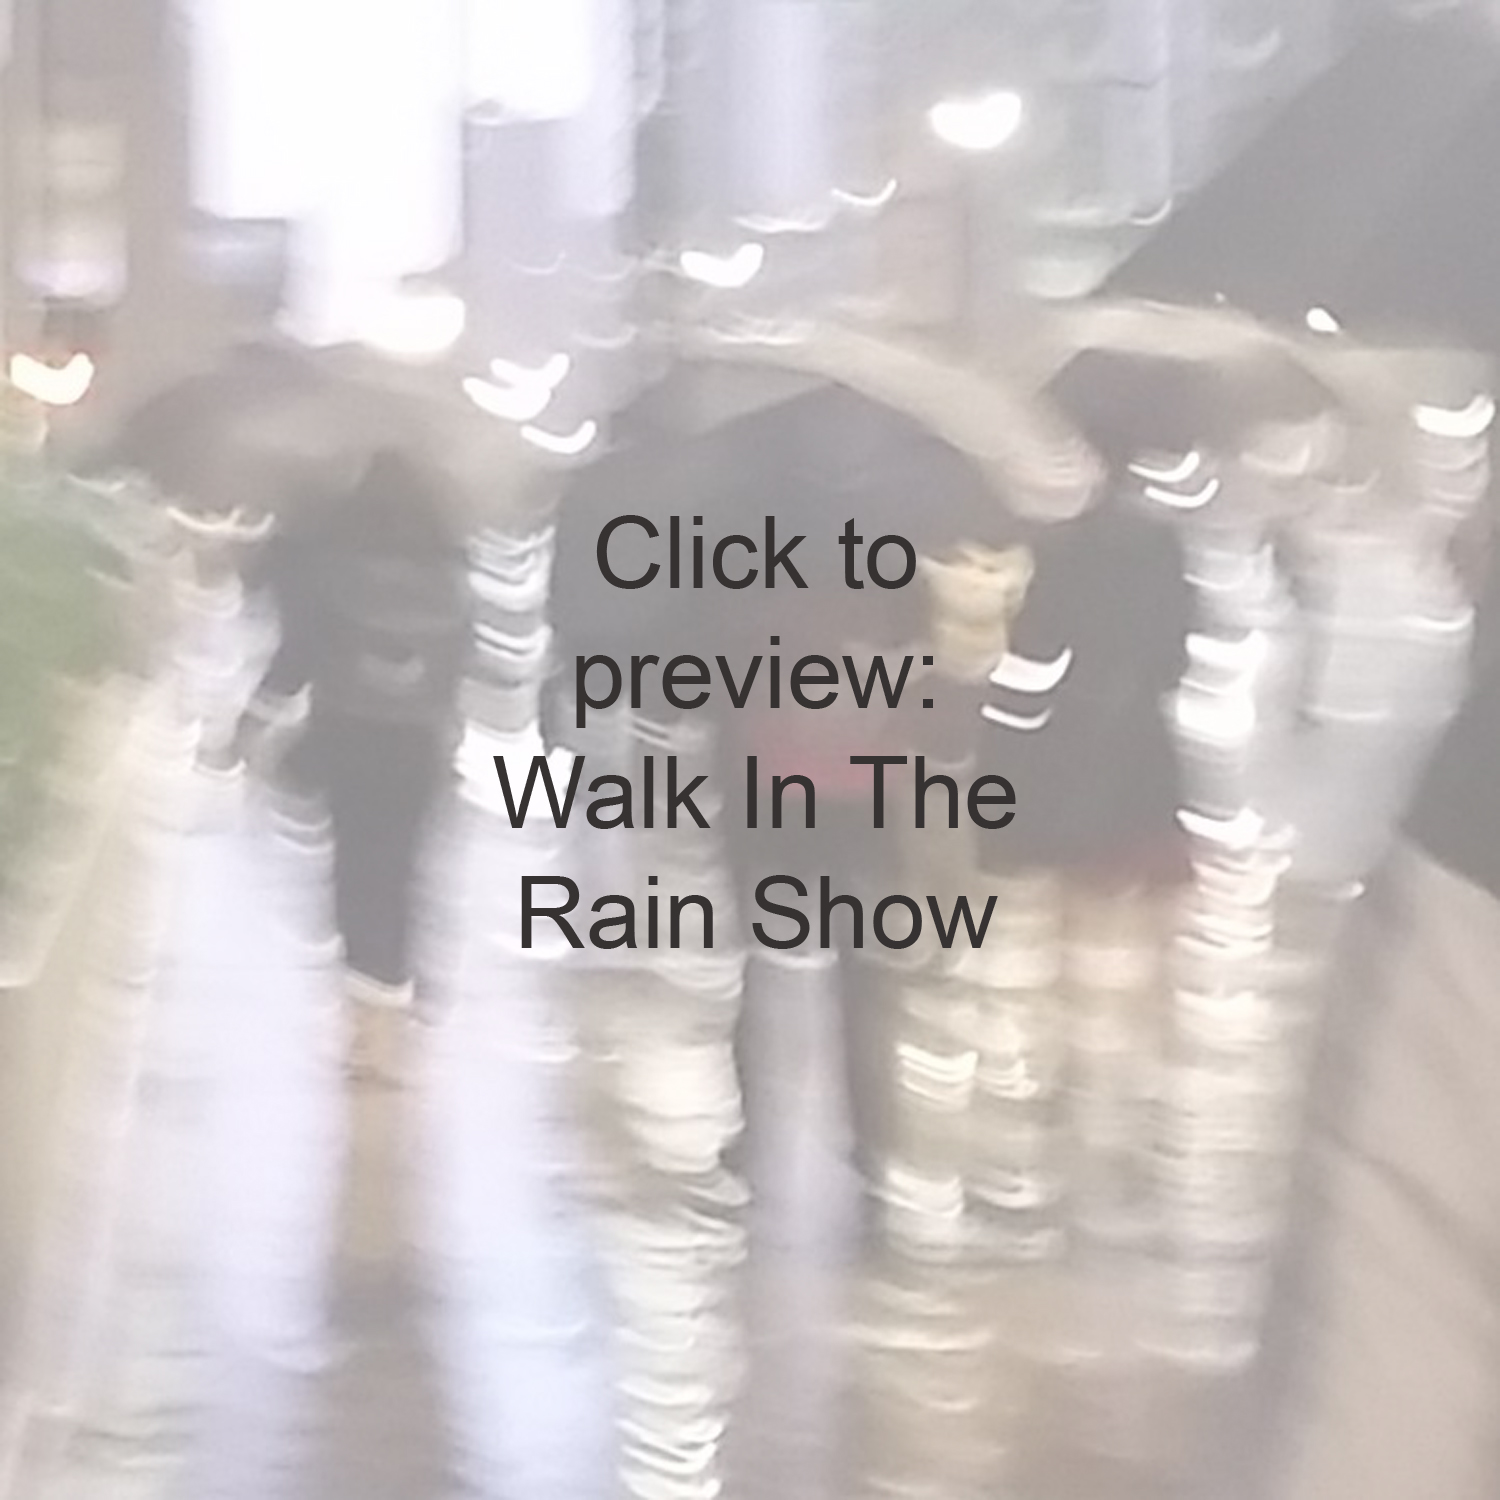 enter_walk_rain_show.jpg